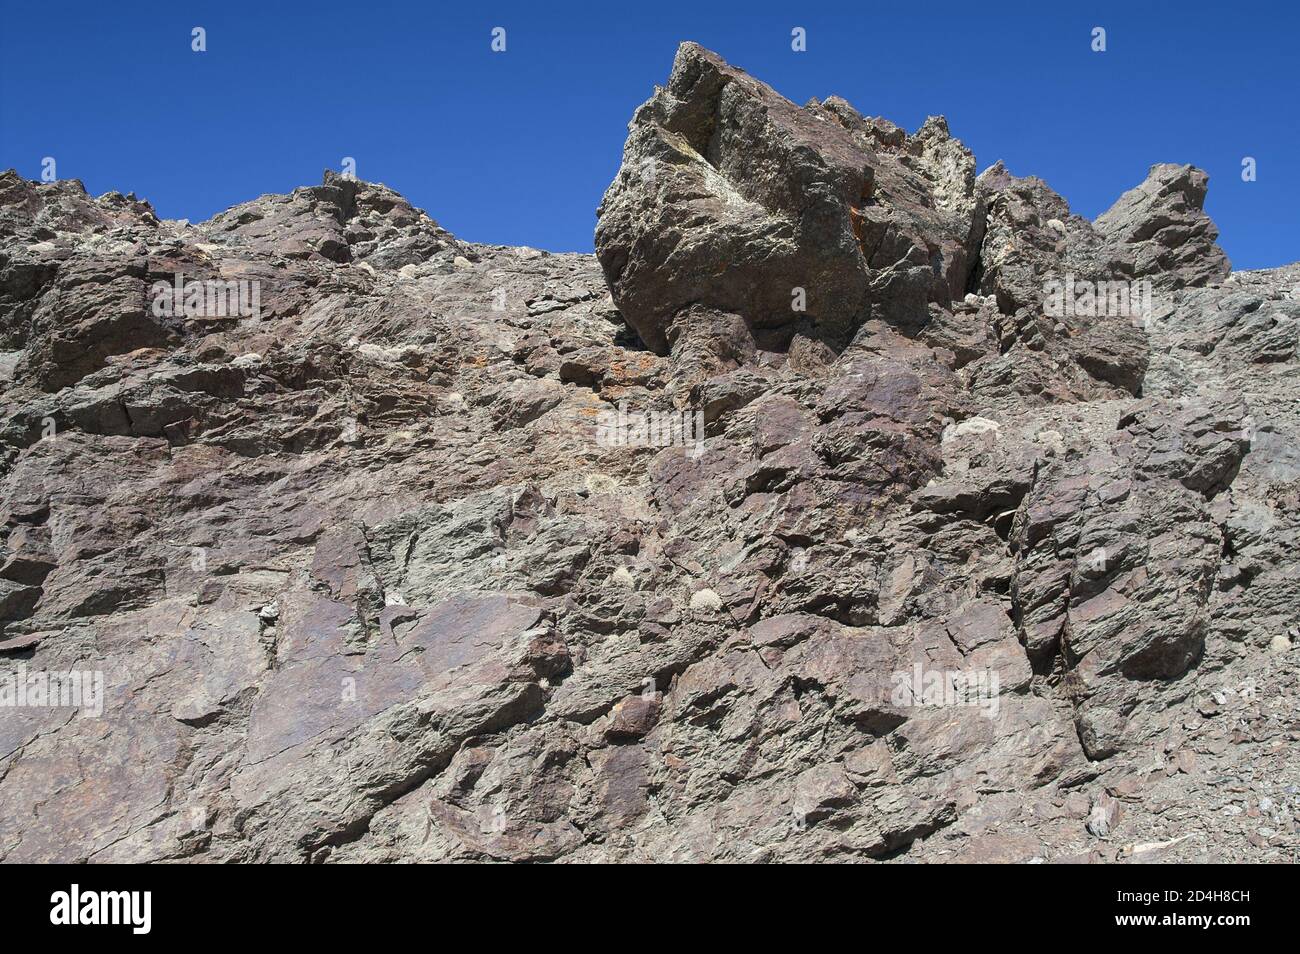 Sierra Nevada, España, Hiszpania, Spain, Spanien; Metamorphic rocks in the upper part of the mountains. Metamorphe Gesteine im oberen Teil der Berge Stock Photo